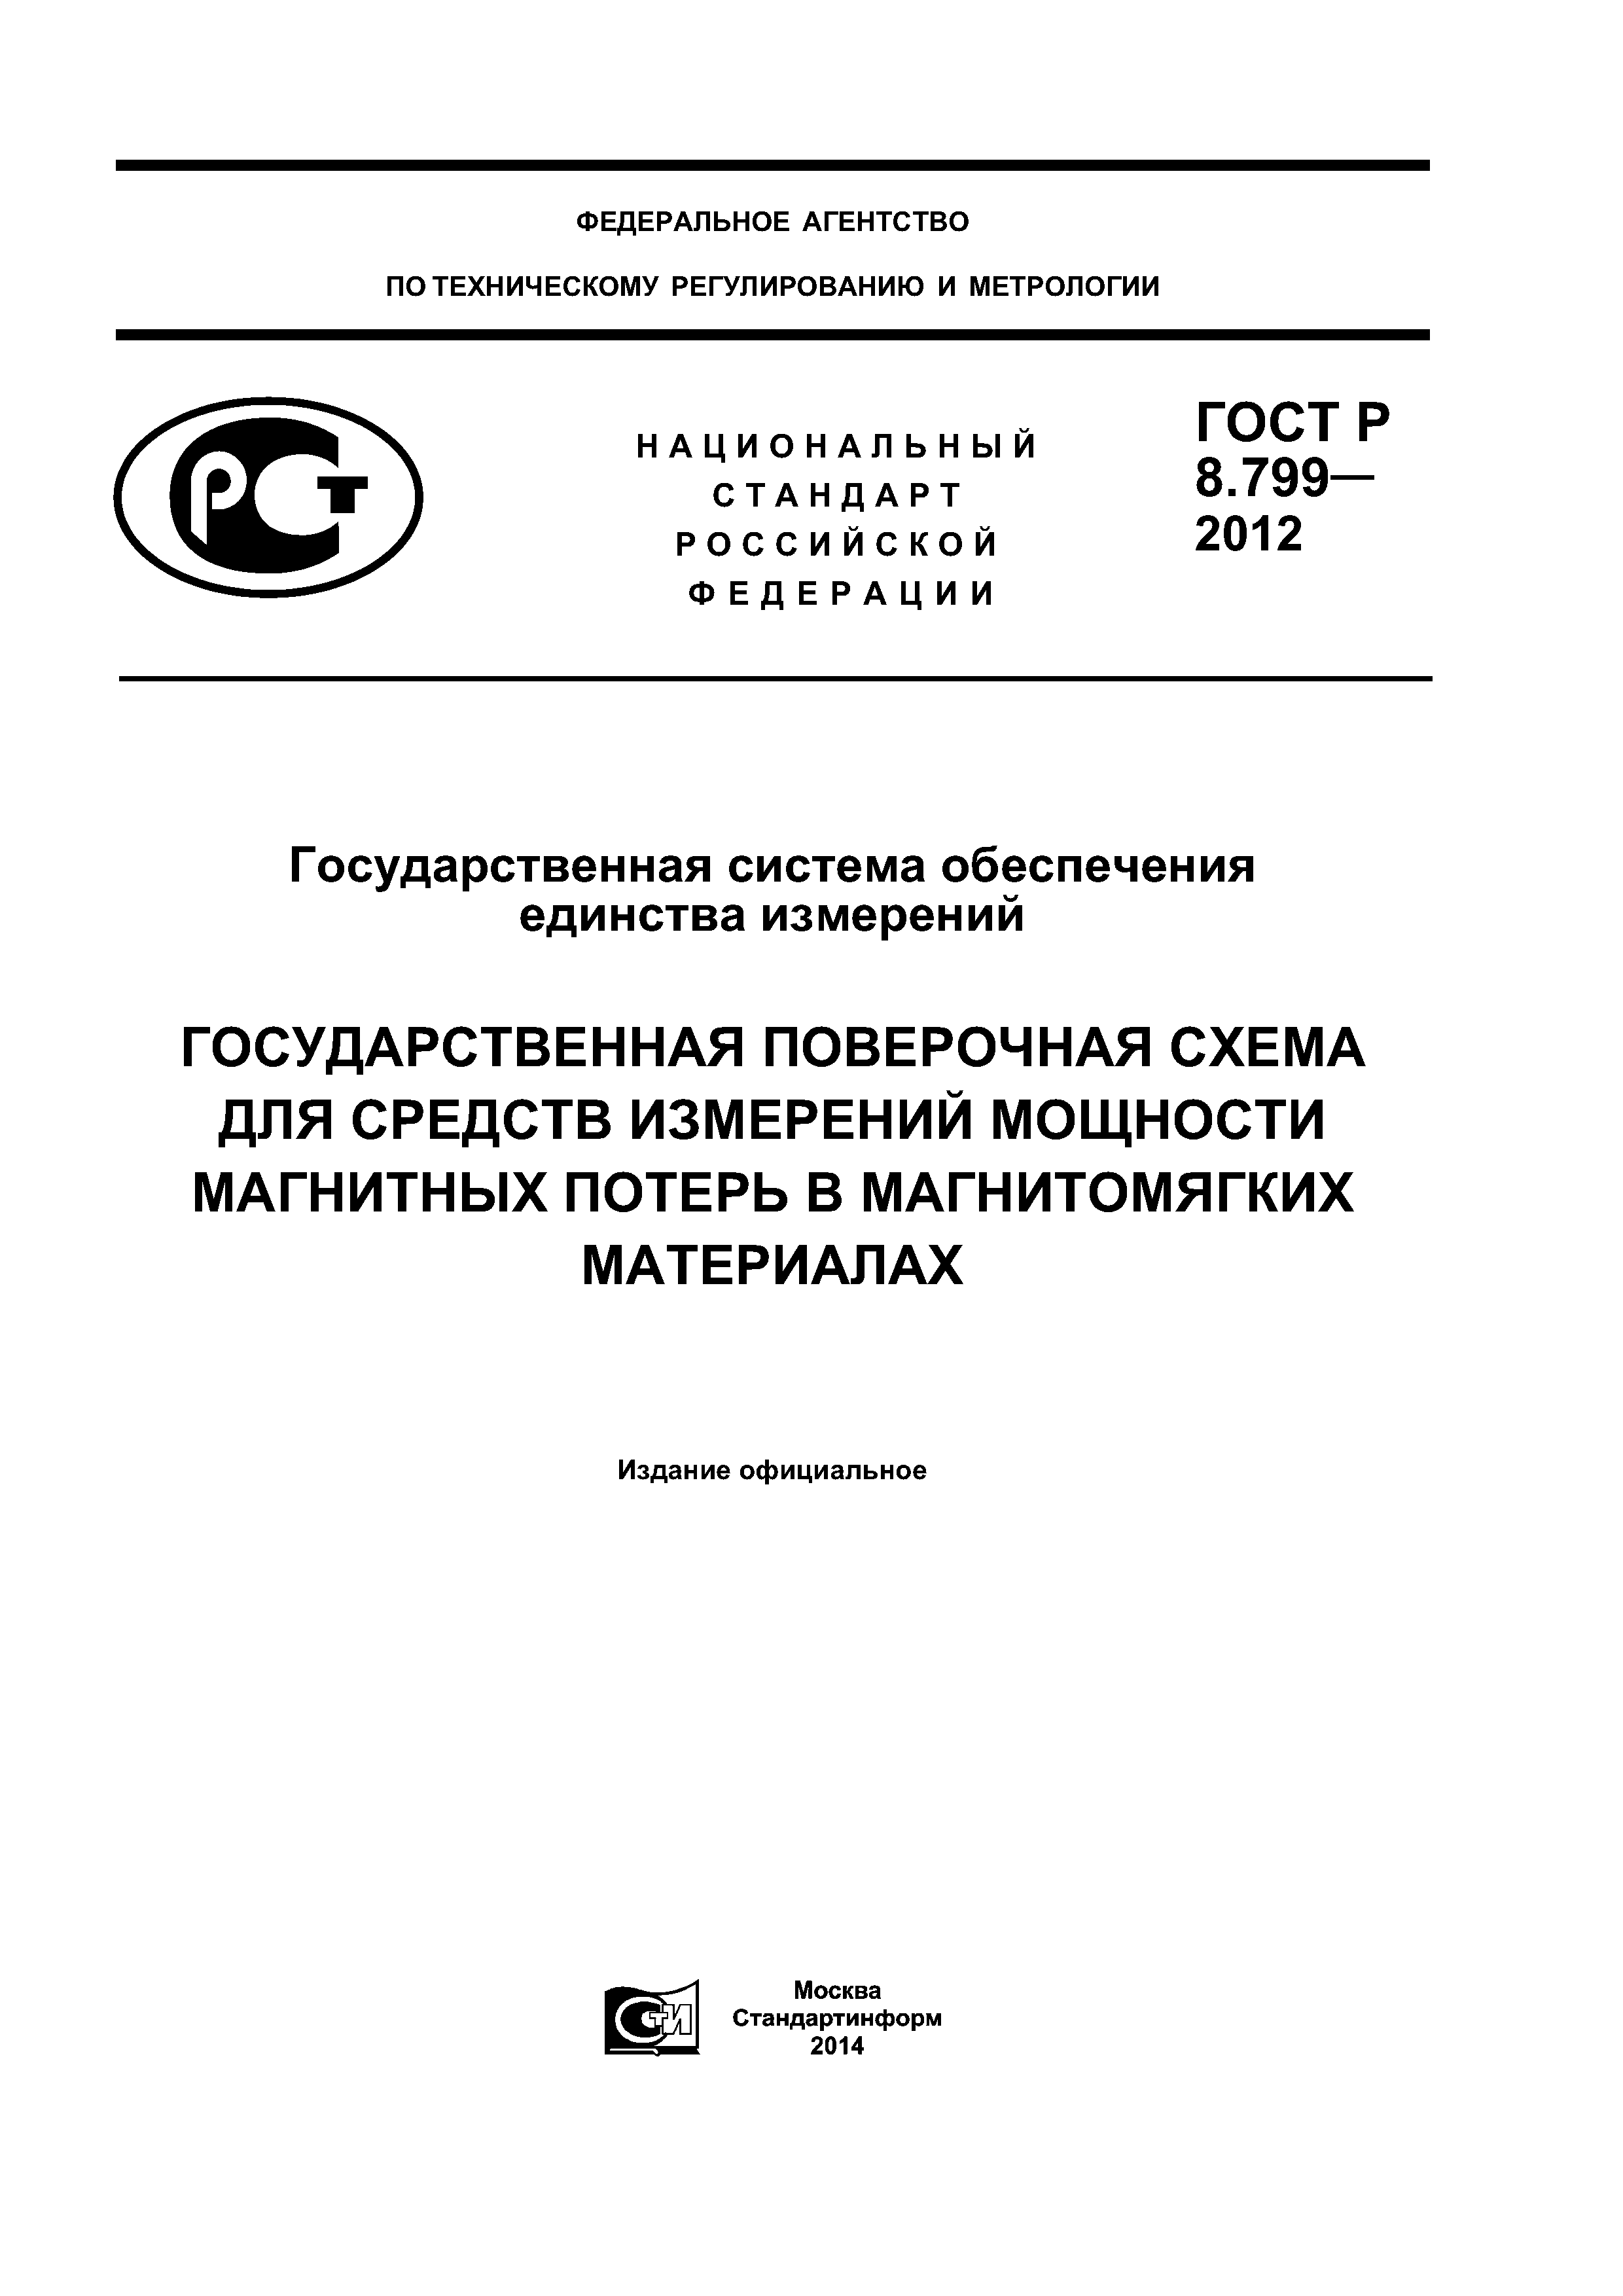 ГОСТ Р 8.799-2012